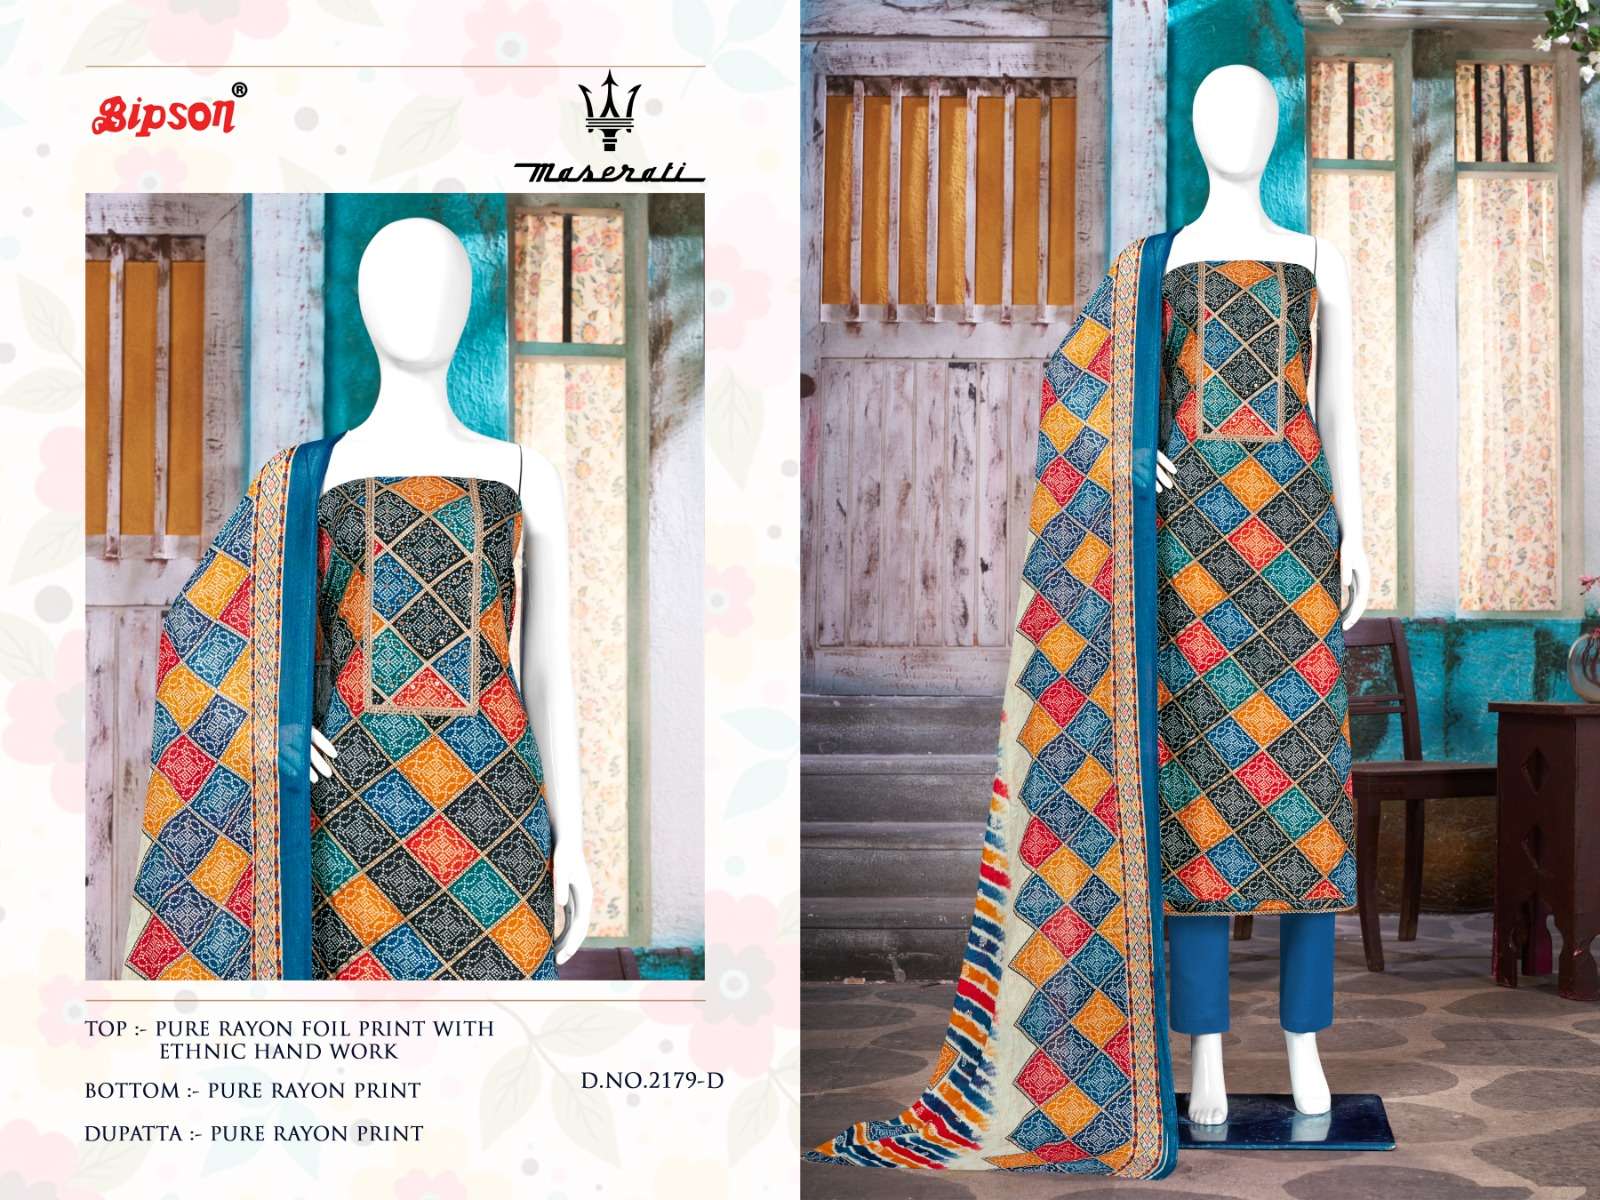 bipson prints maserati 2179 series rayon print designer salwar suits catalogue design 2023